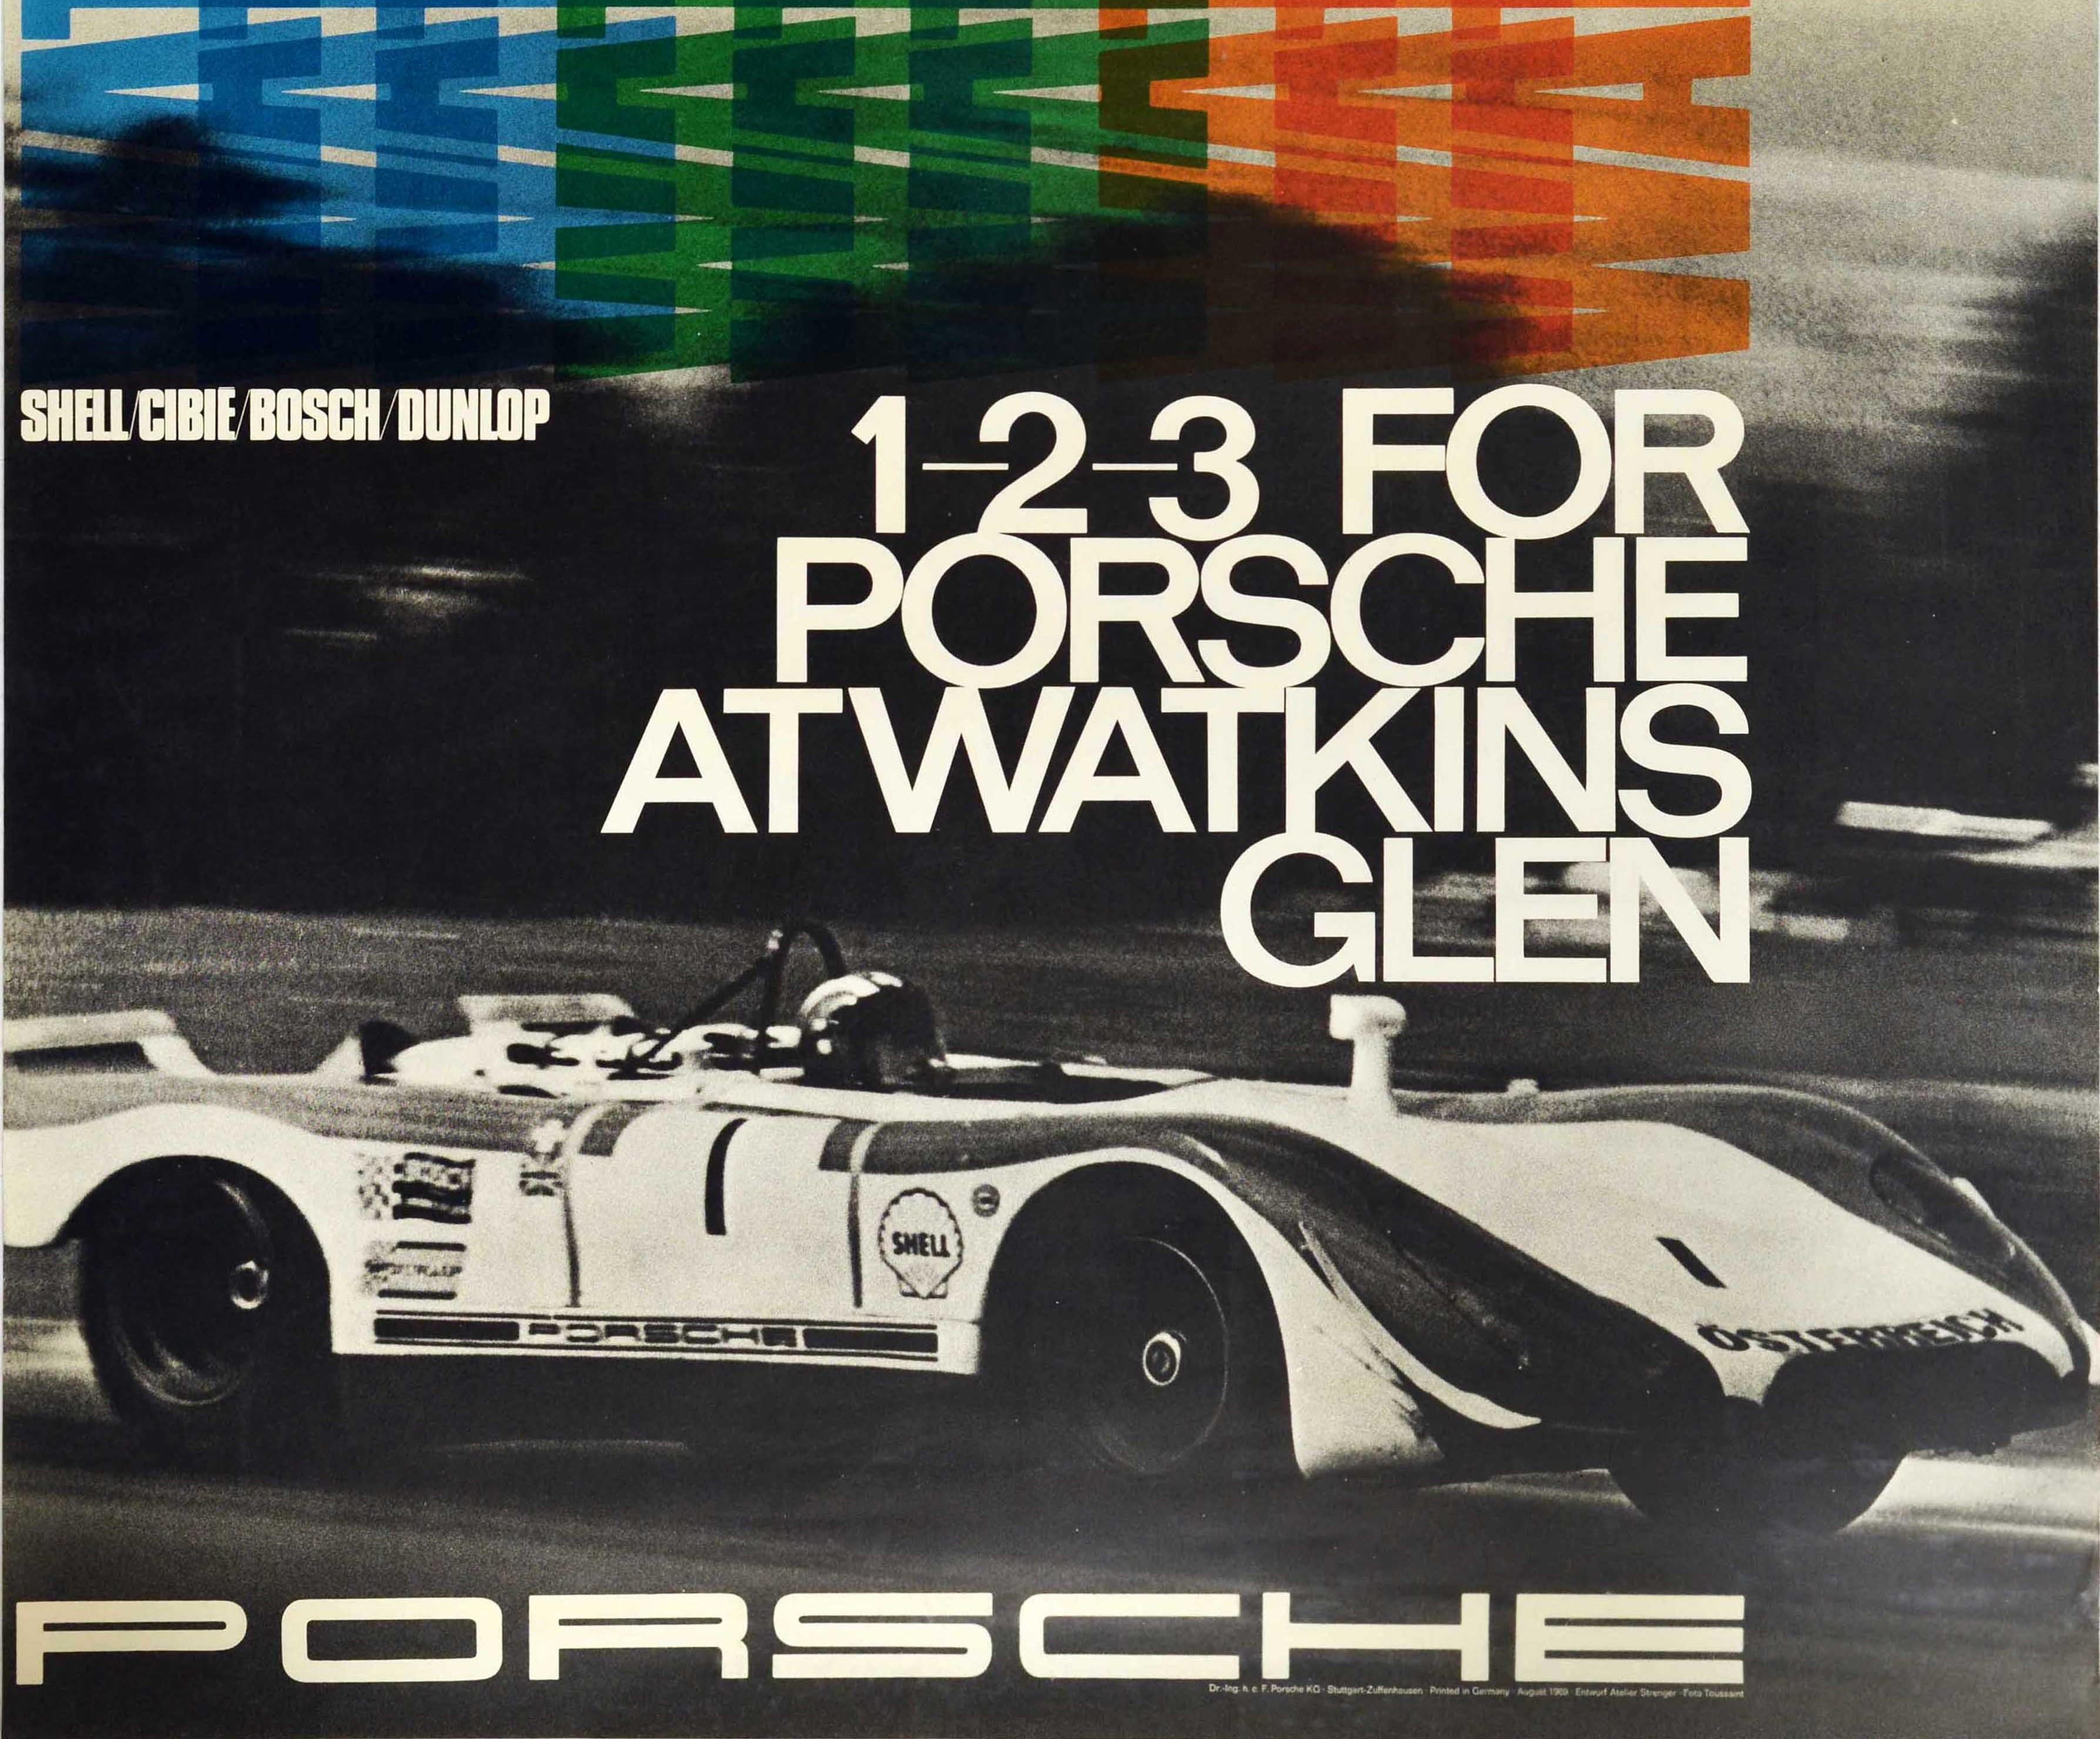 vintage racing poster